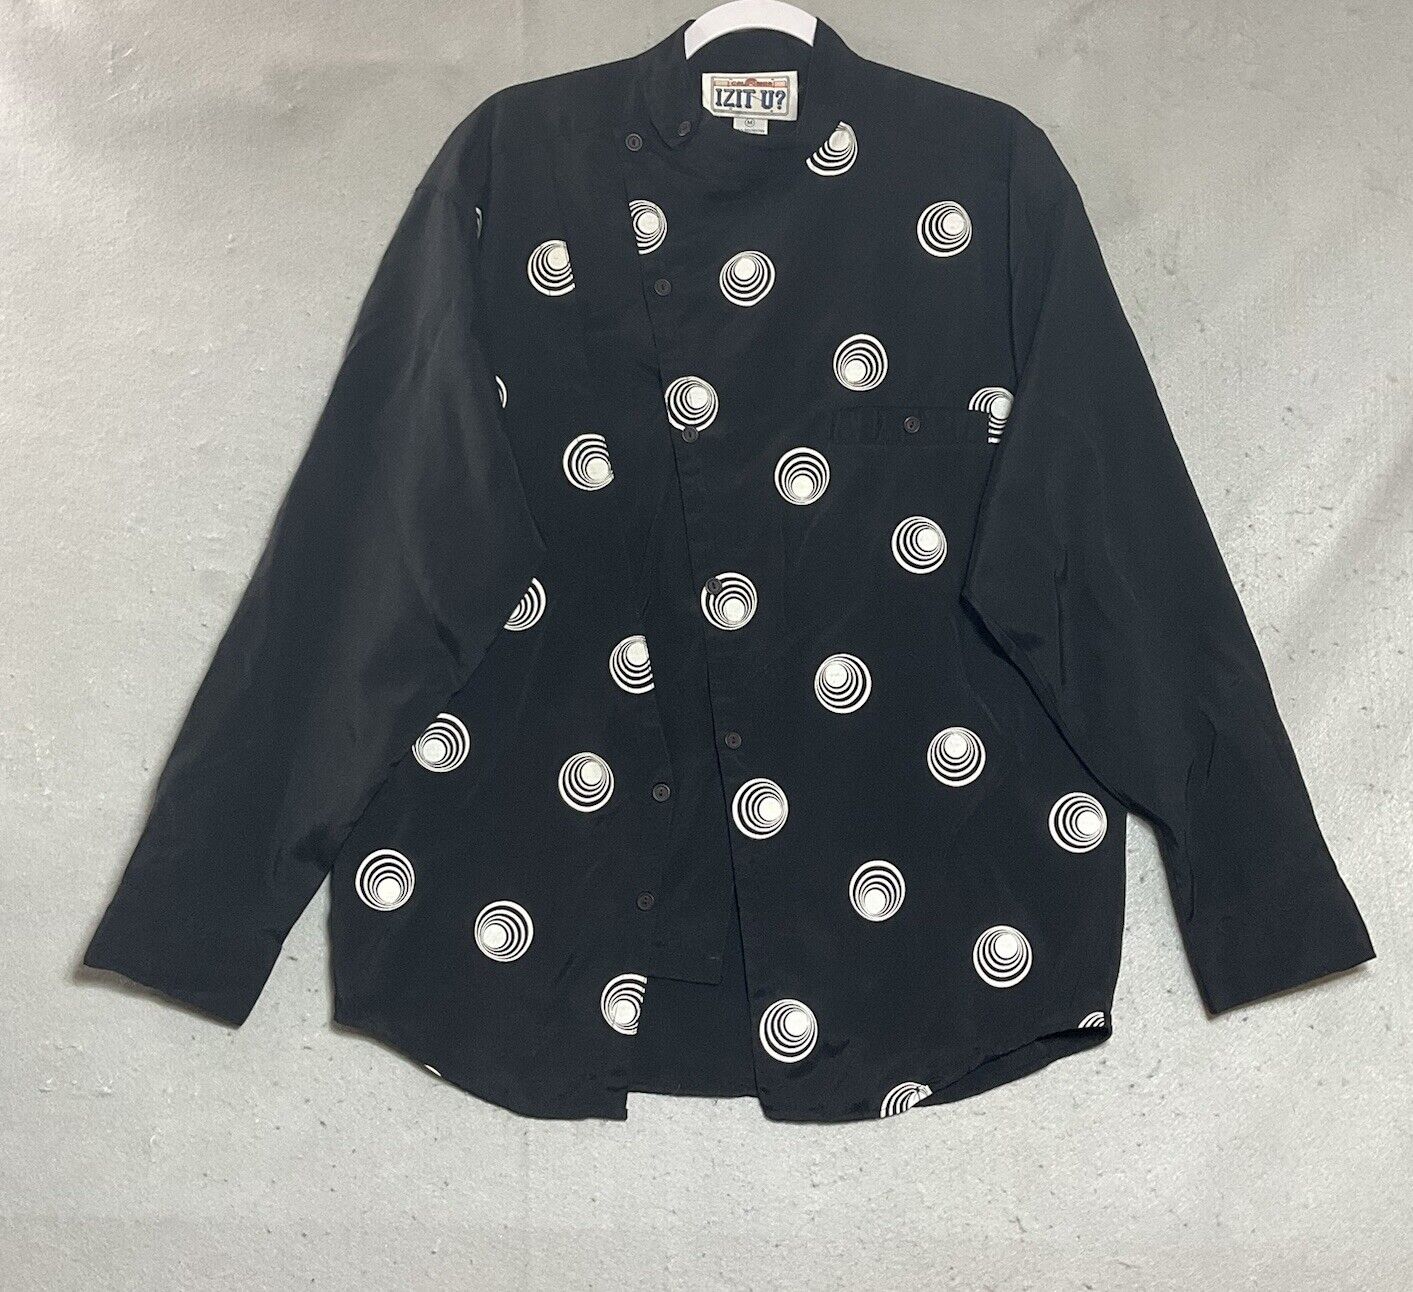 Vintage Top Shirt Womens Medium Black Geometric Oversize Retro Party Streetwear